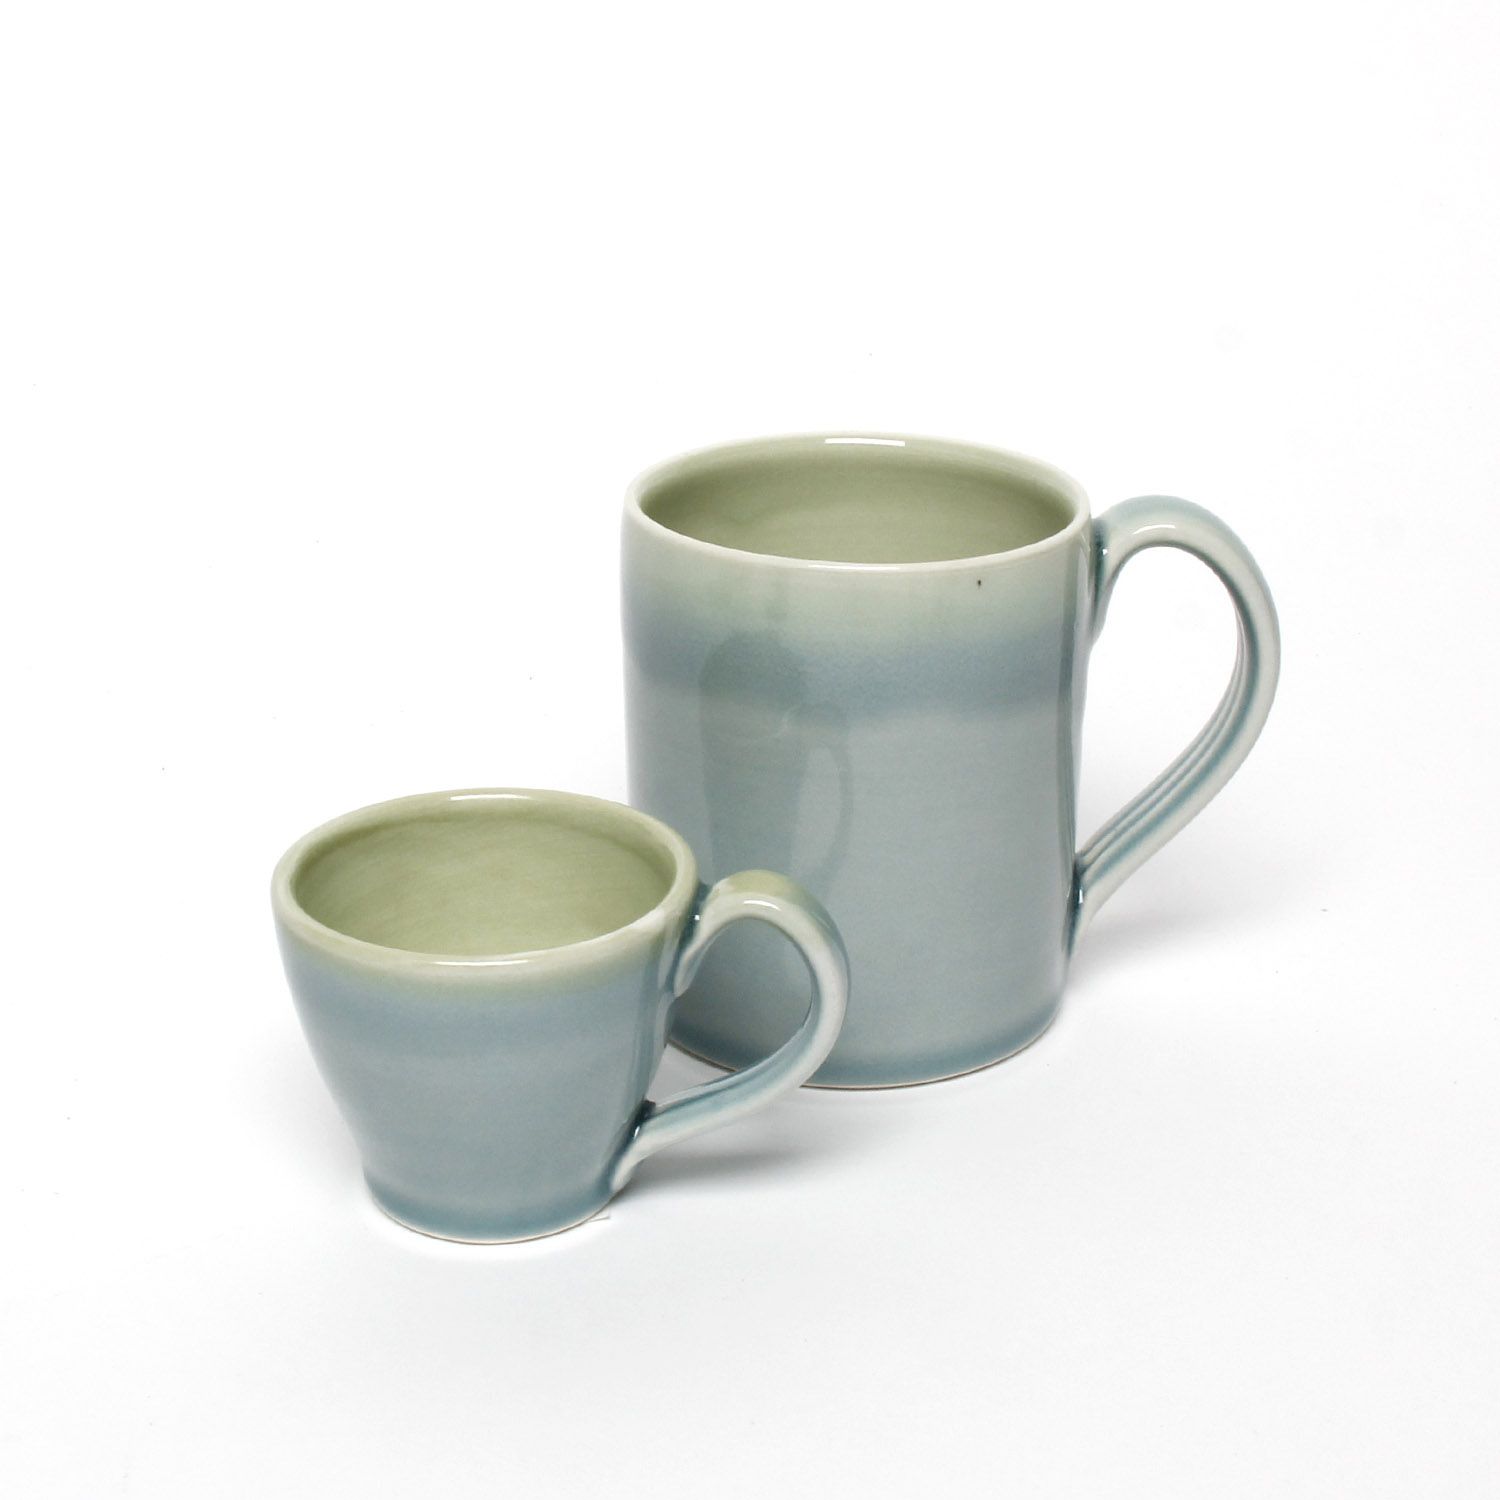 Thomas Aitken: Celadon Espresso Cup Product Image 3 of 3